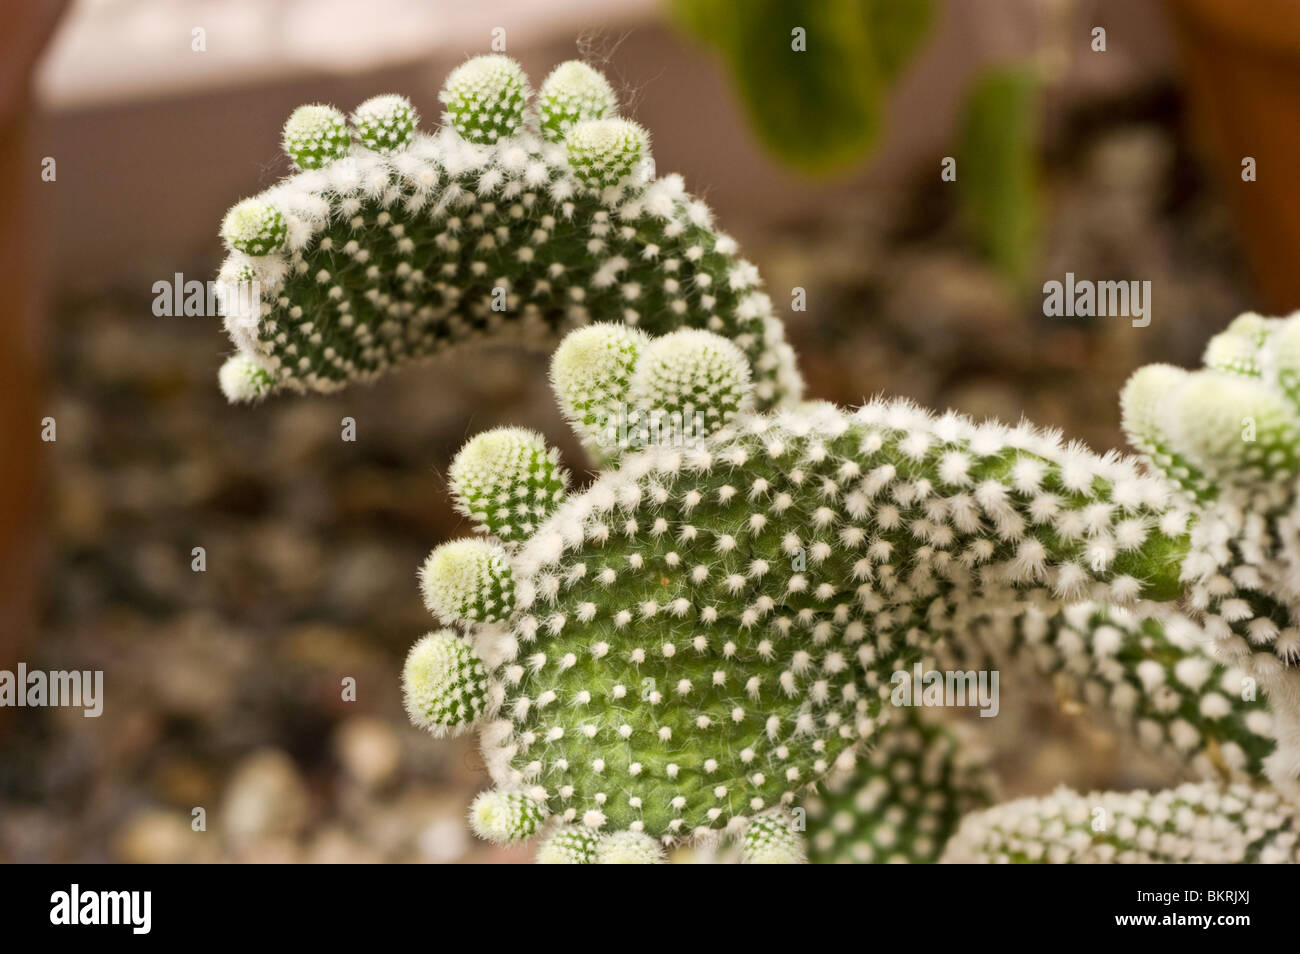 Bunny Ear Cactus, Bunny Cactus, Polka-dot Cactus, Opuntia microdasys Albispina, Cactaceae Stock Photo